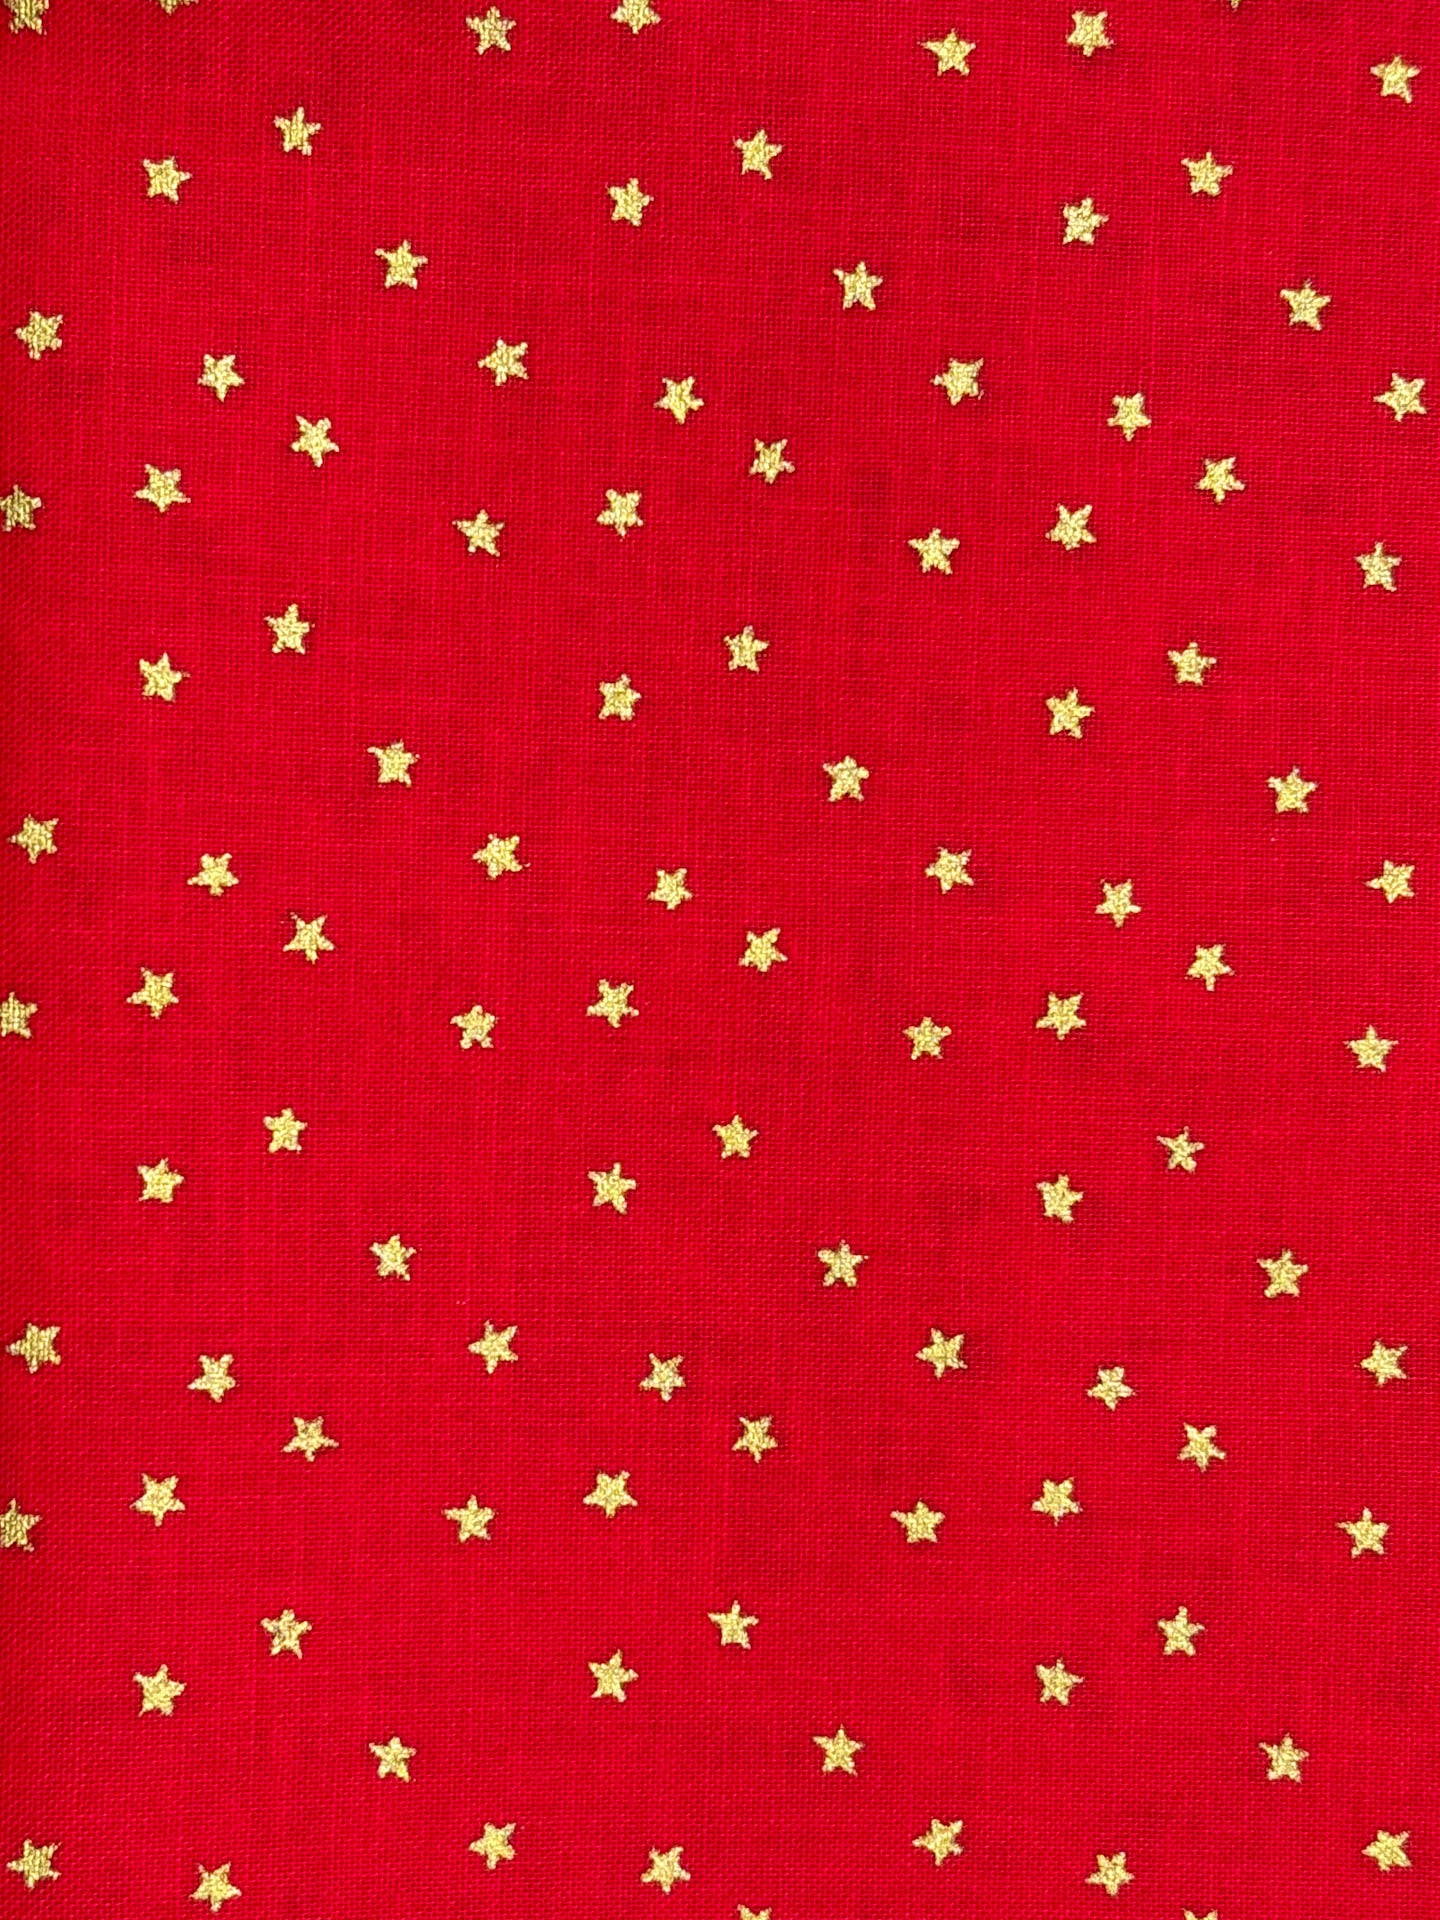 Mini Gold Stars on Bright Red cotton fabric